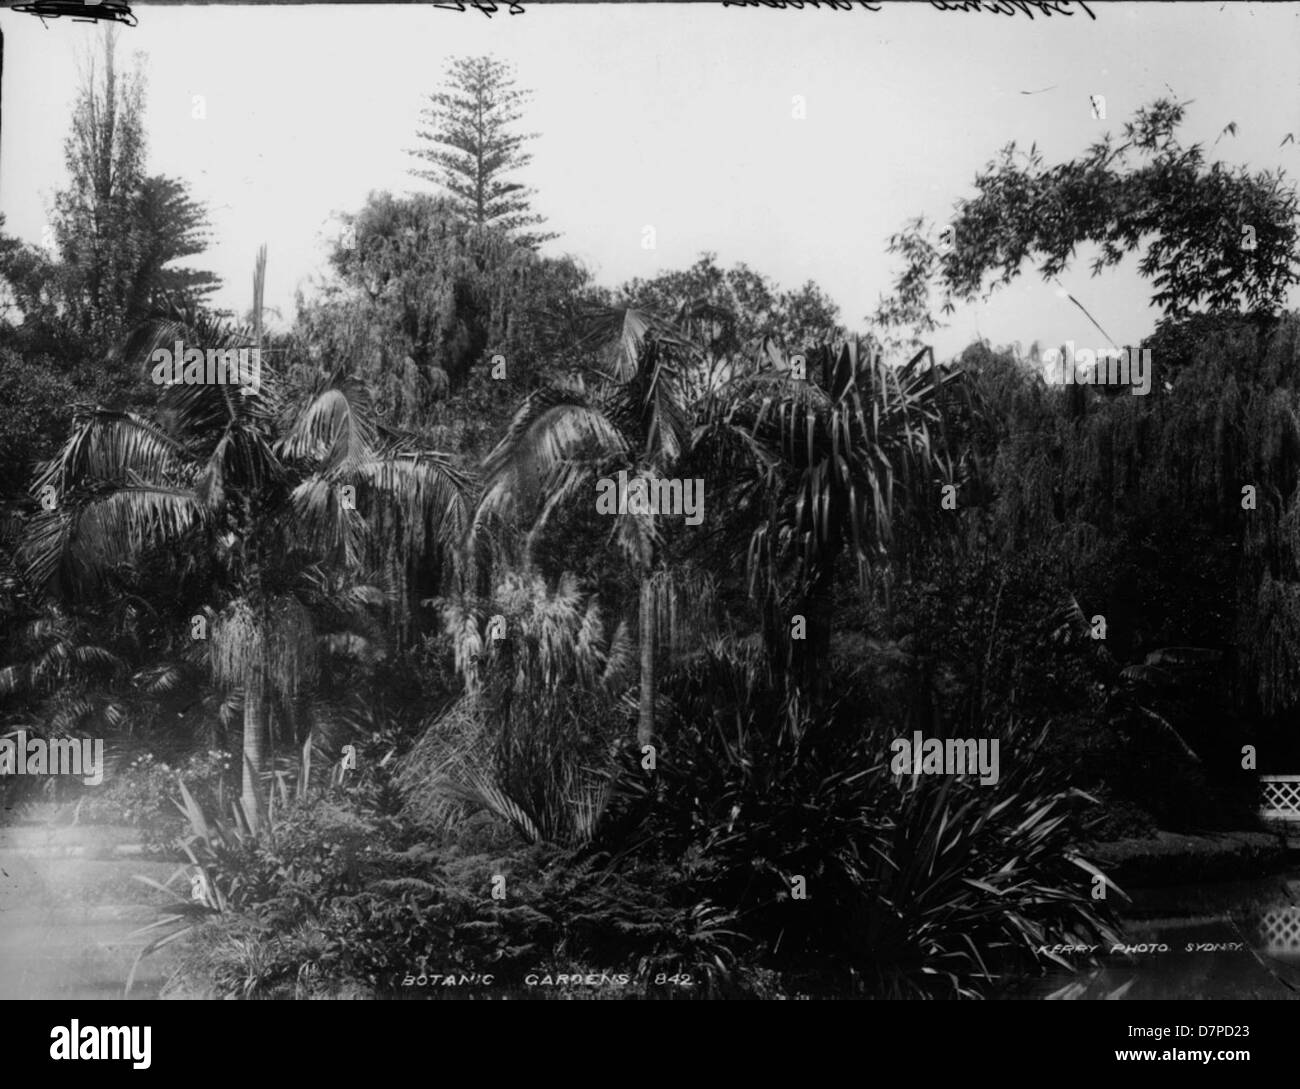 Royal botanic garden and sydney Black and White Stock Photos & Images ...